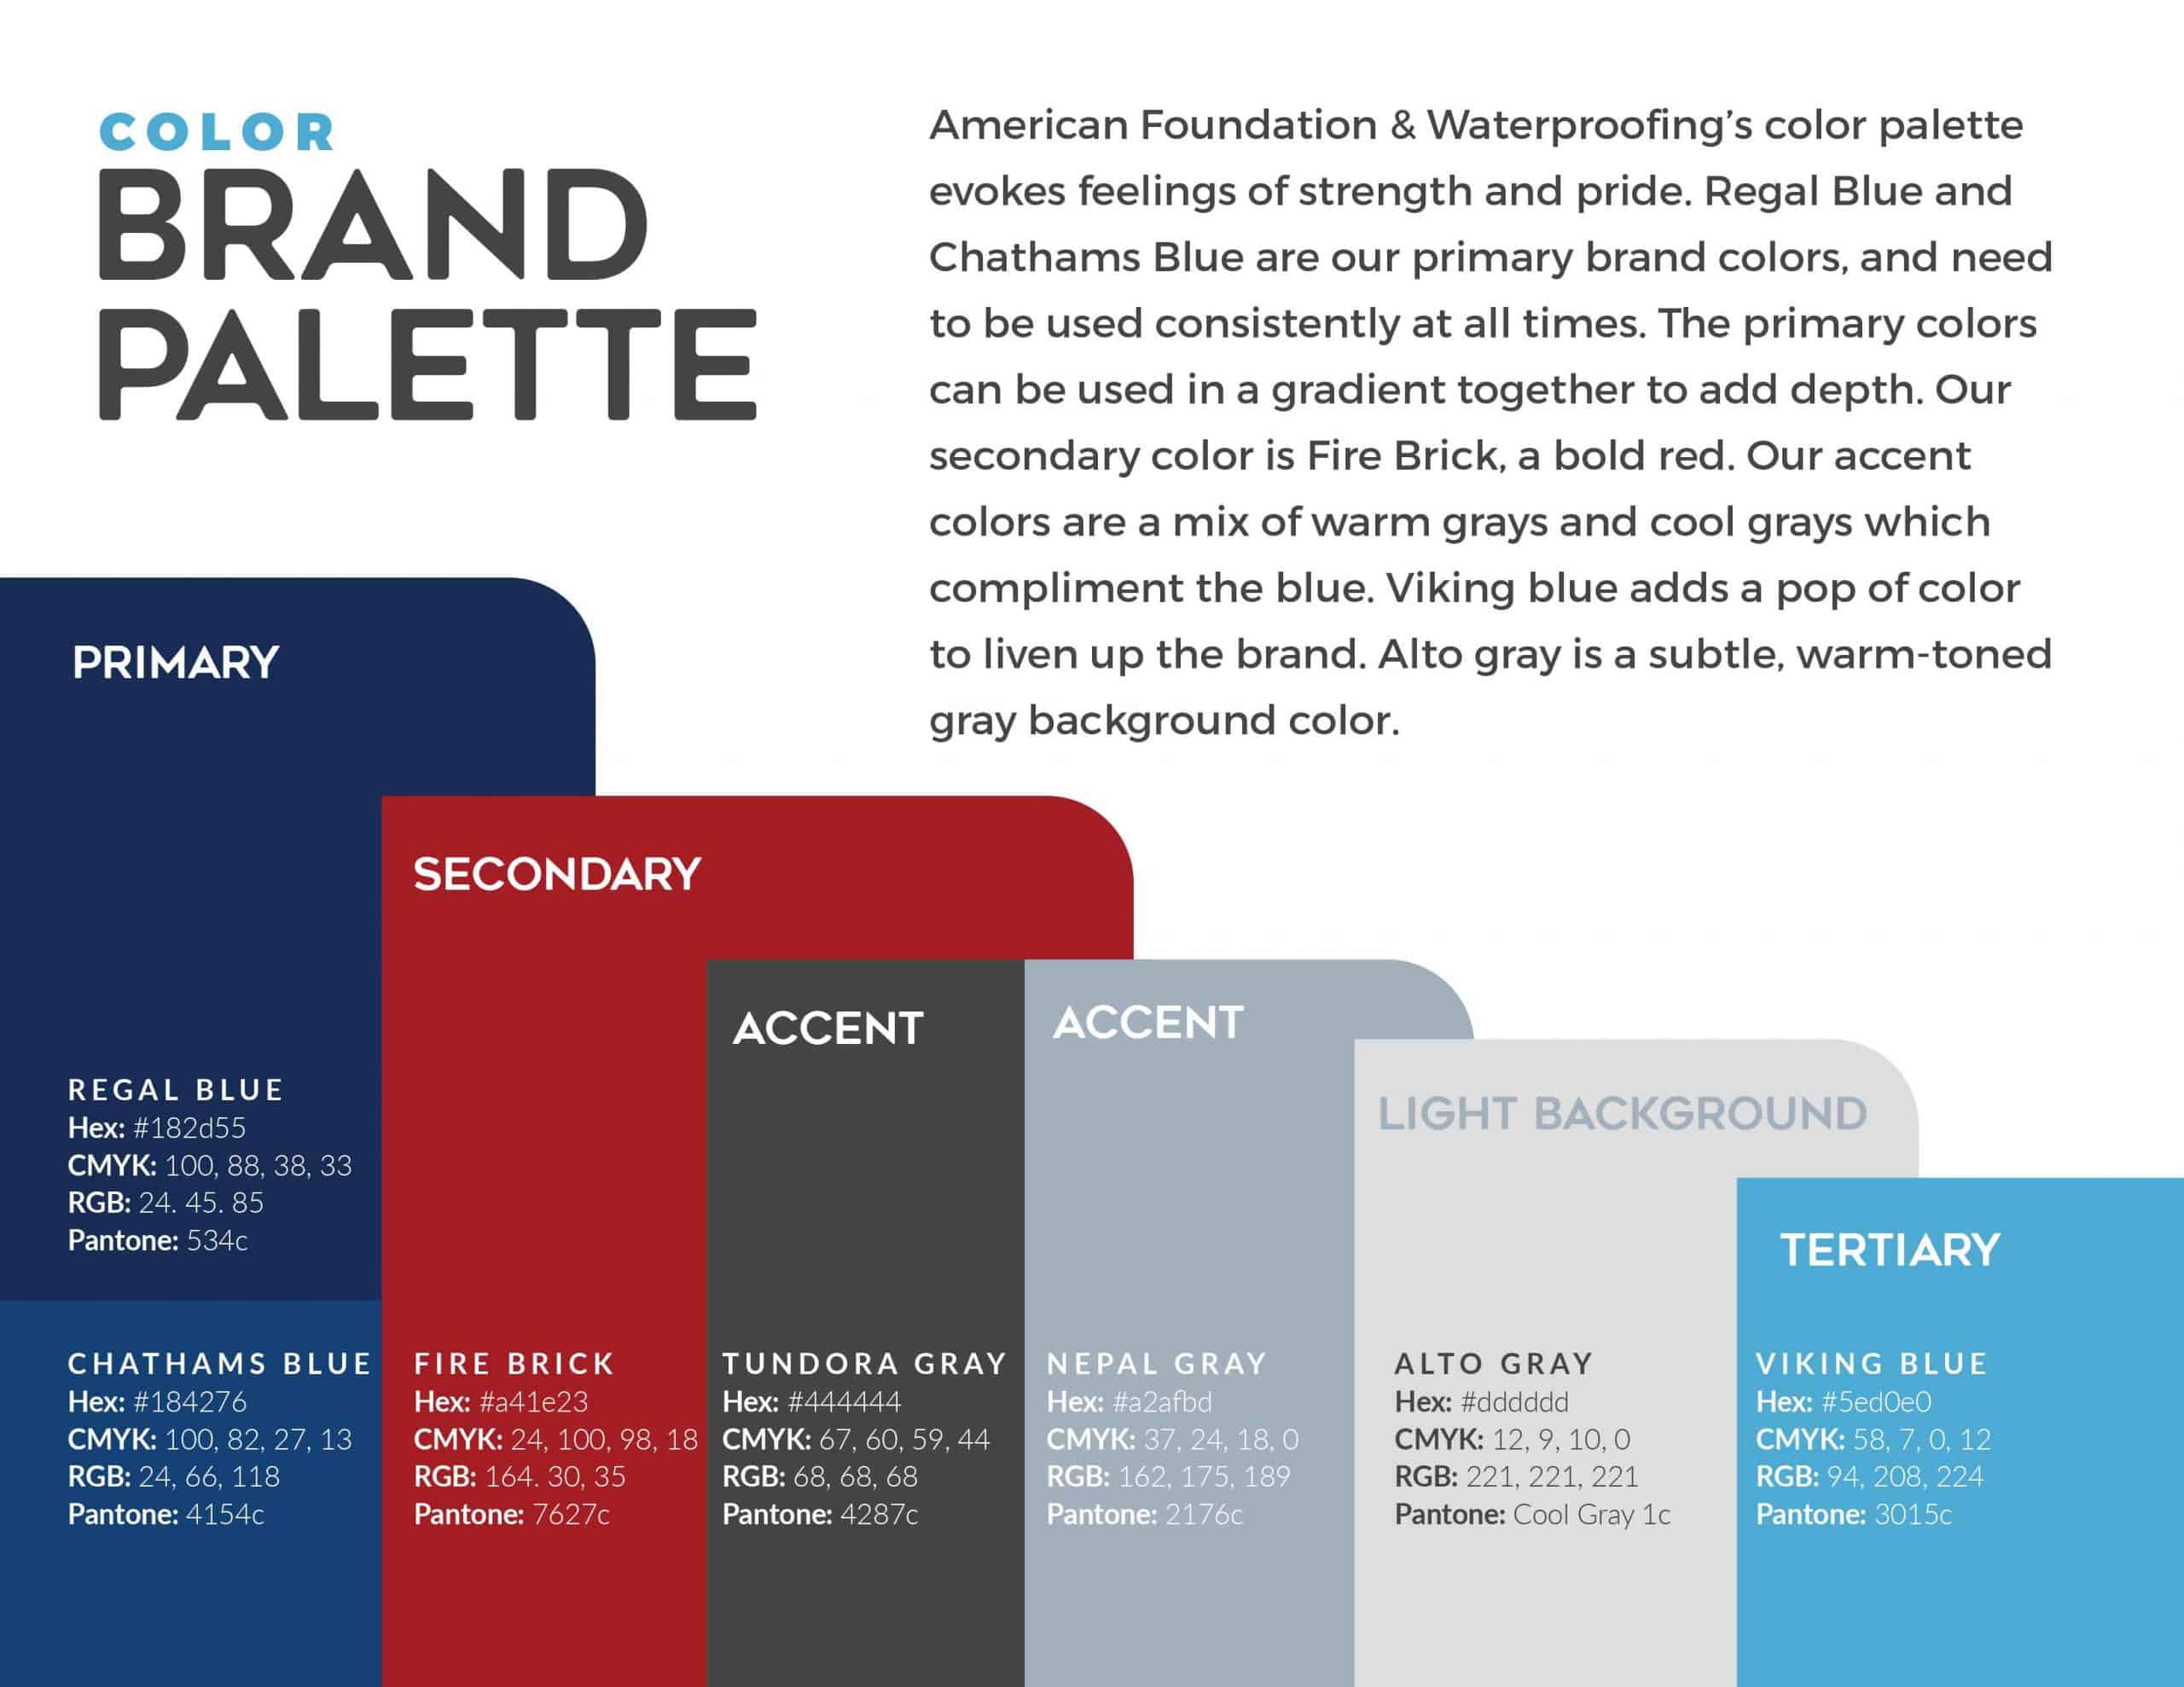 American Foundation & Waterproofing Brand Guide - Brand Palette